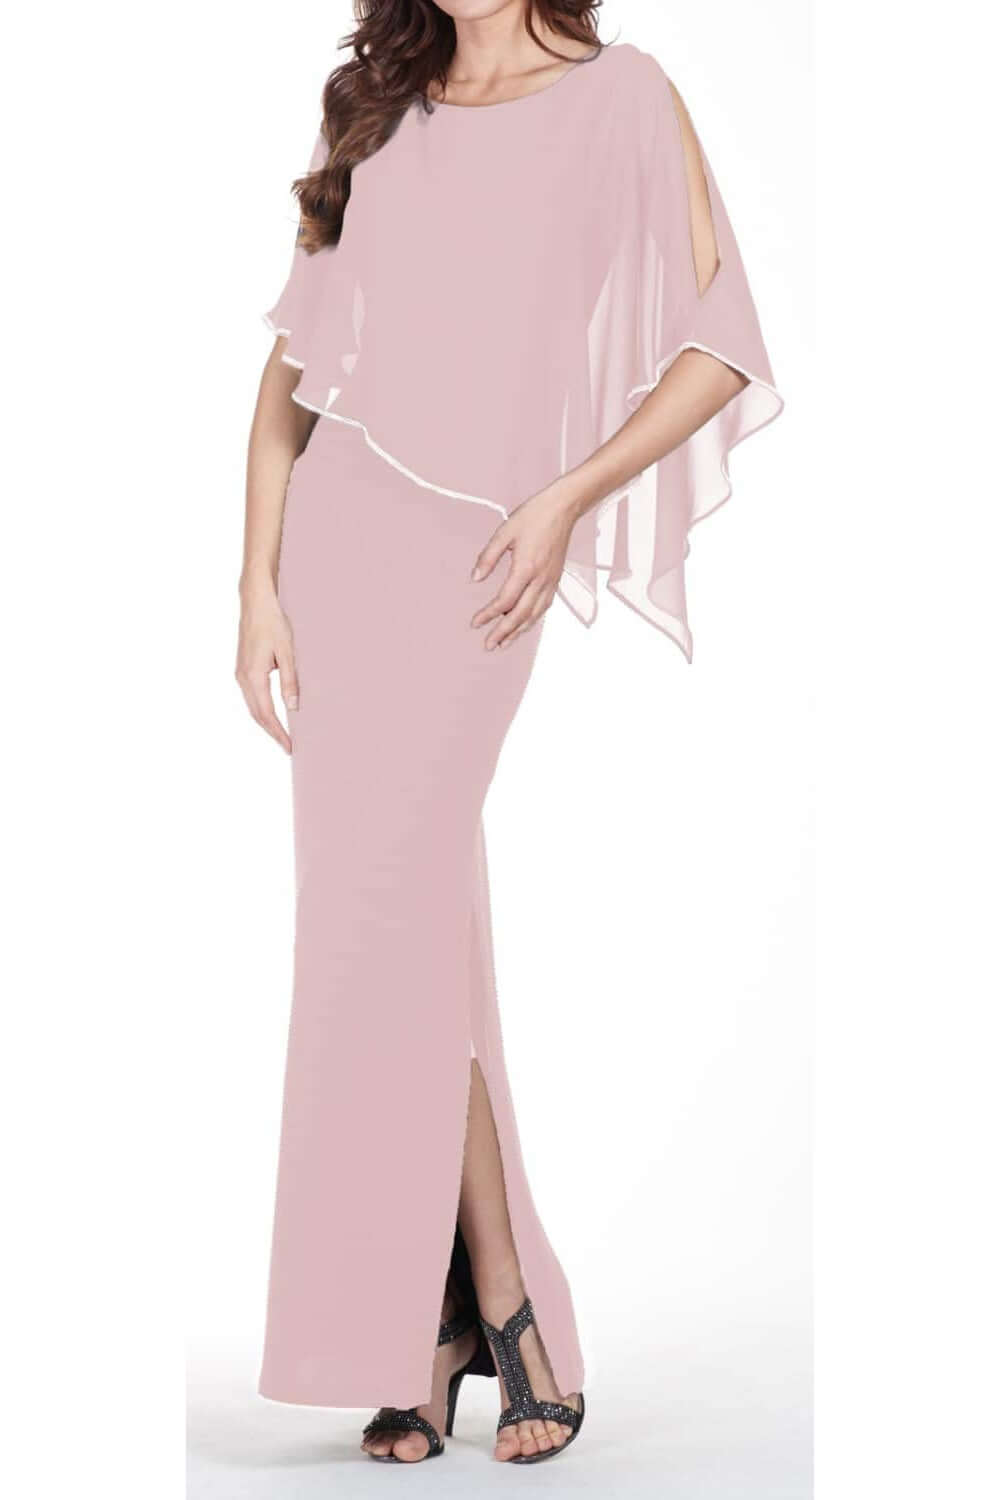 Frank Lyman Dress Style 179257-BLS Blush/Silver Belle Mia Boutique